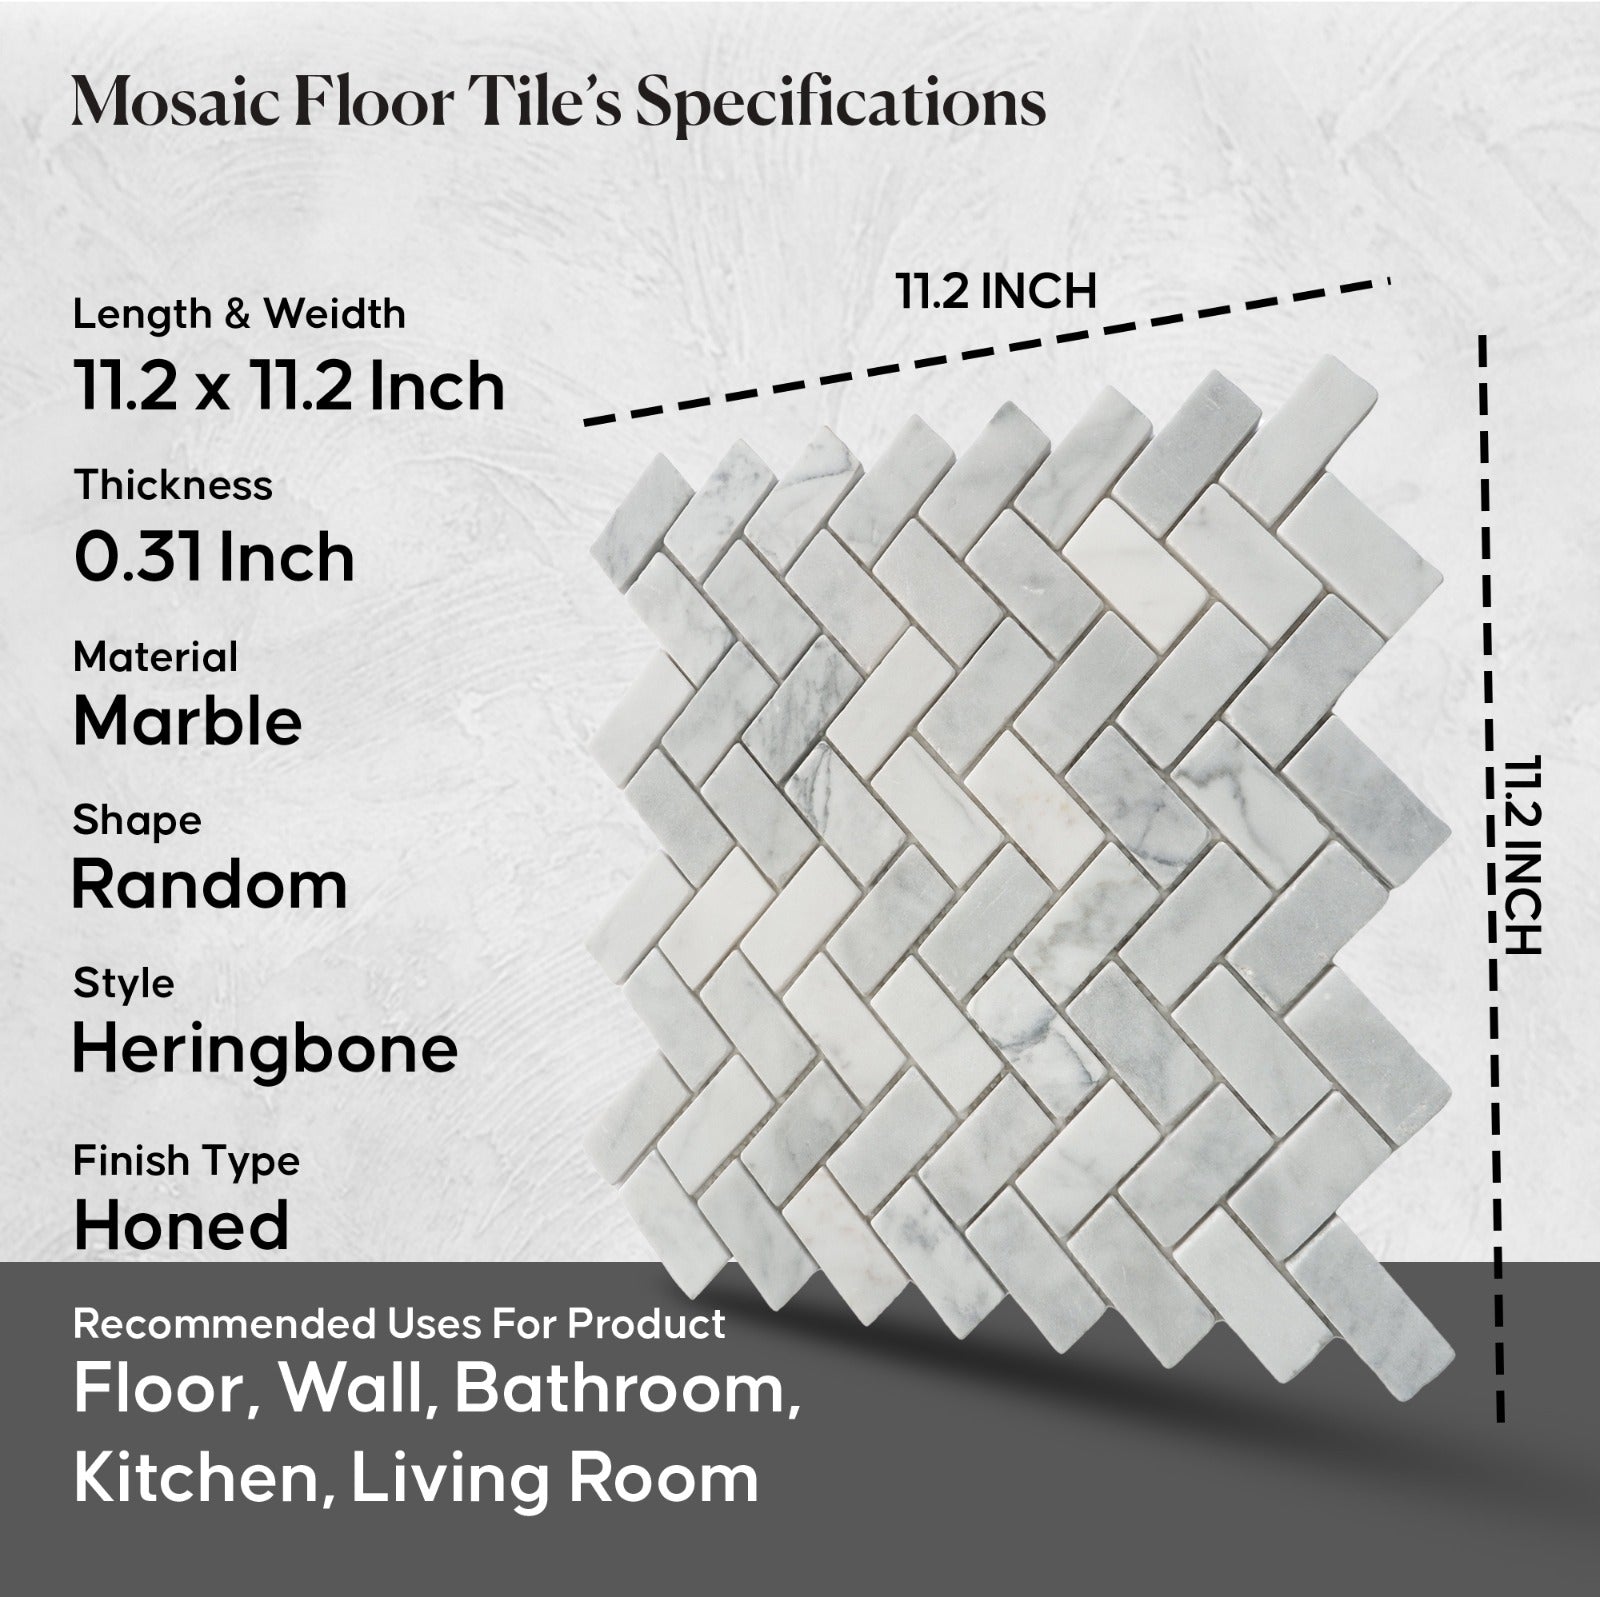 Herringbone Mosaic Tiles, Herringbone Carrara Mosaic Wall & Floor Tile